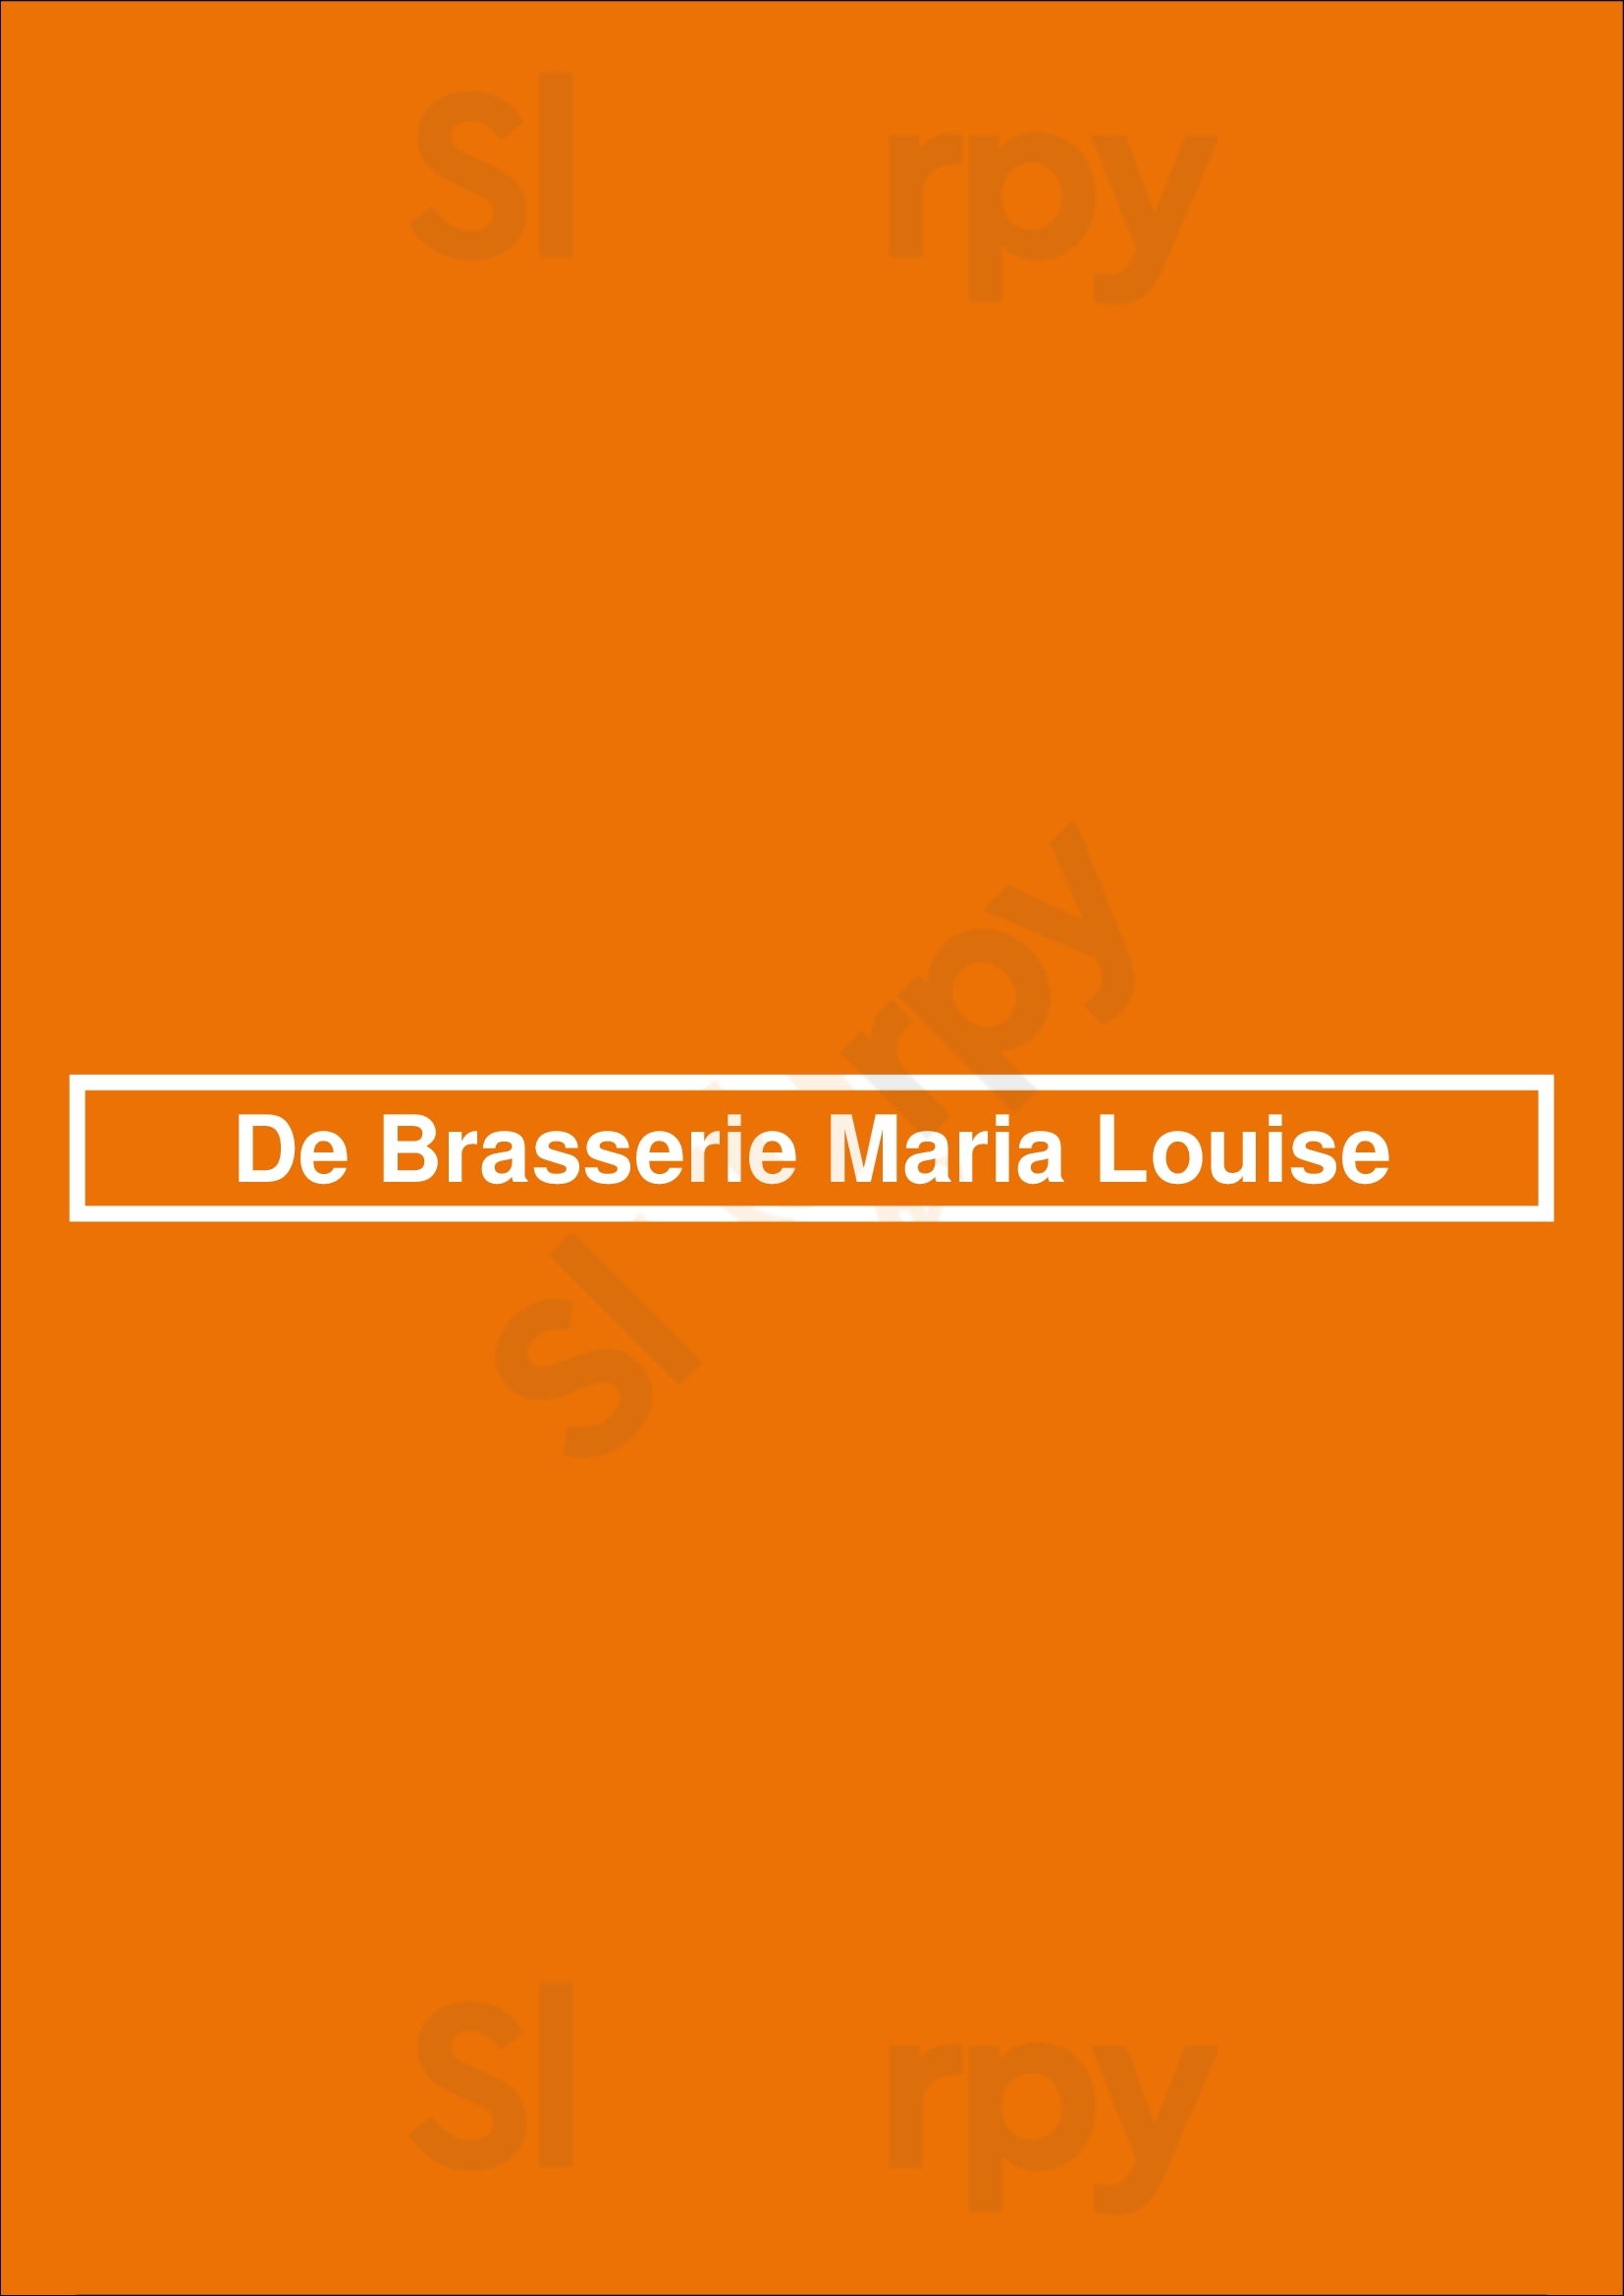 De Brasserie Maria Louise Leeuwarden Menu - 1